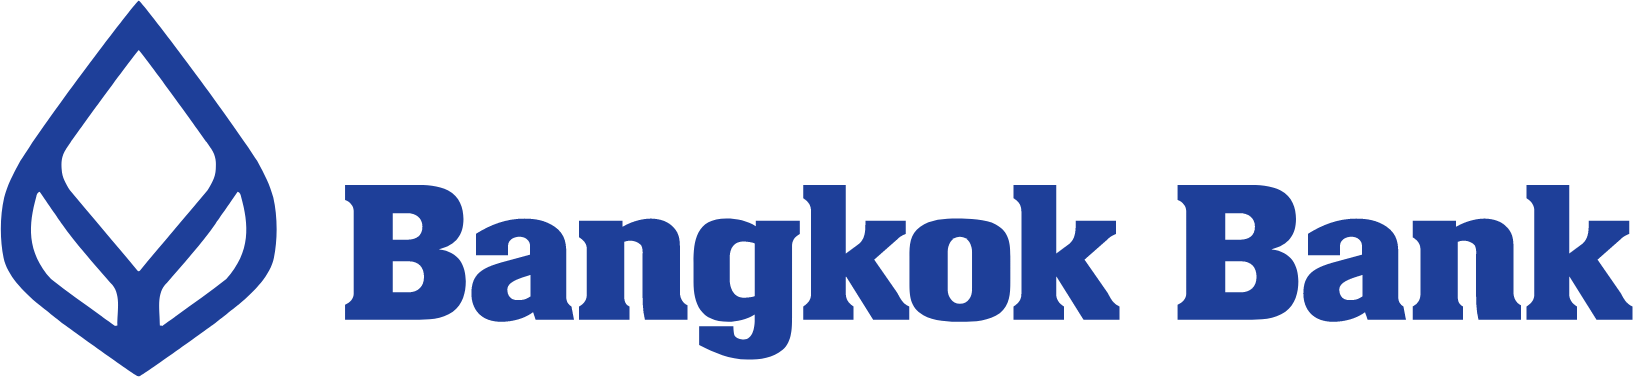 Bangkok Bank
 logo large (transparent PNG)